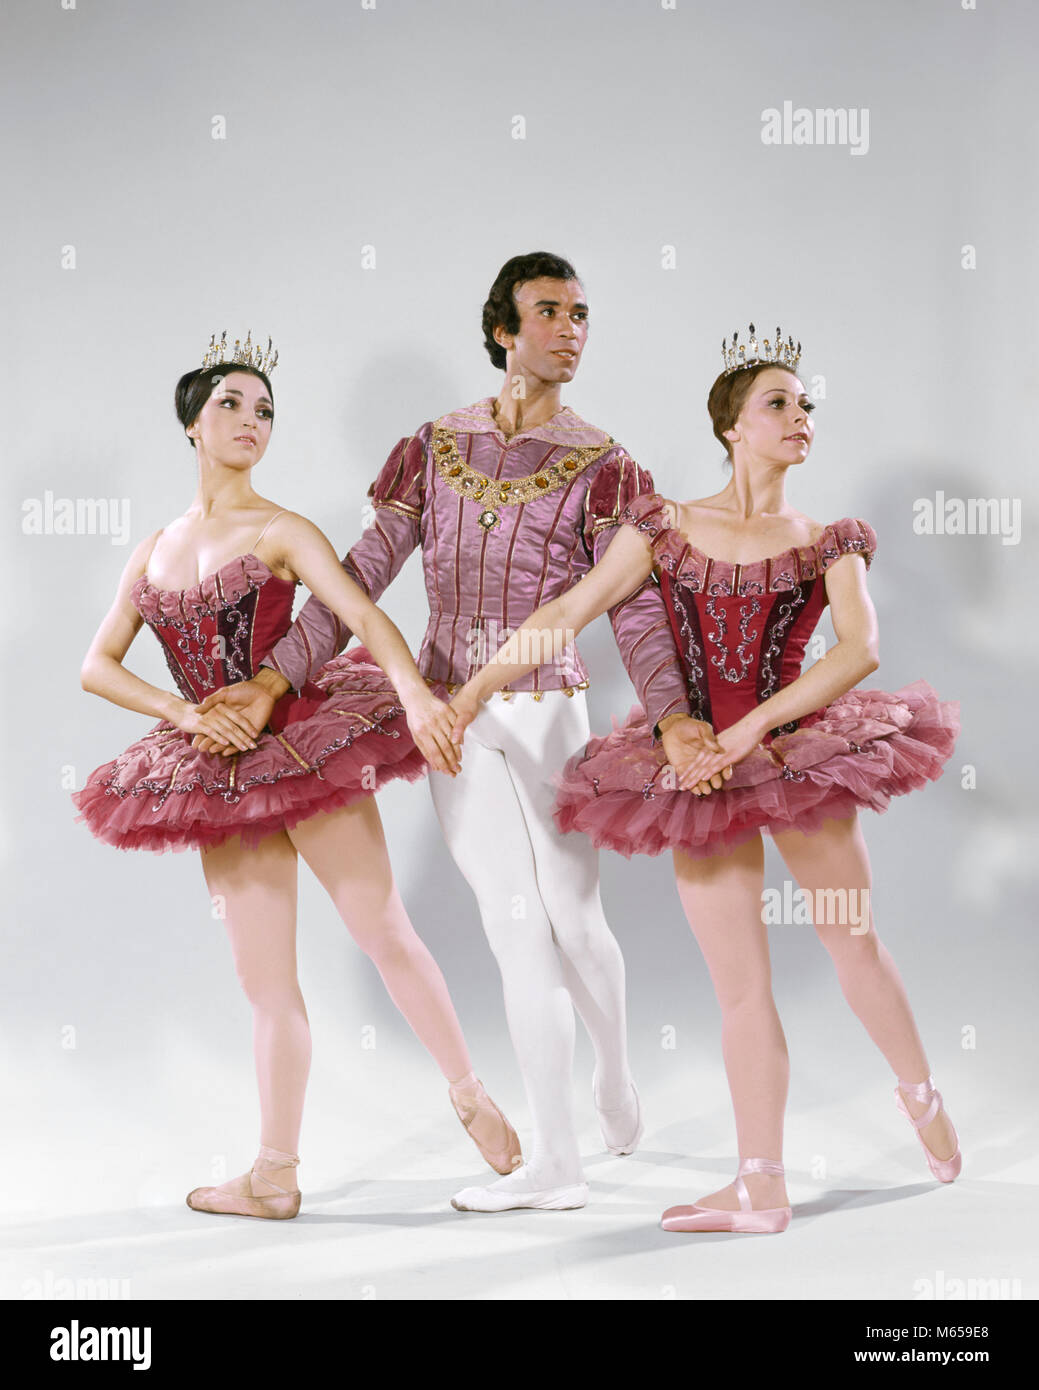 Ropa de ballet hombre fotografías e imágenes de alta resolución - Alamy